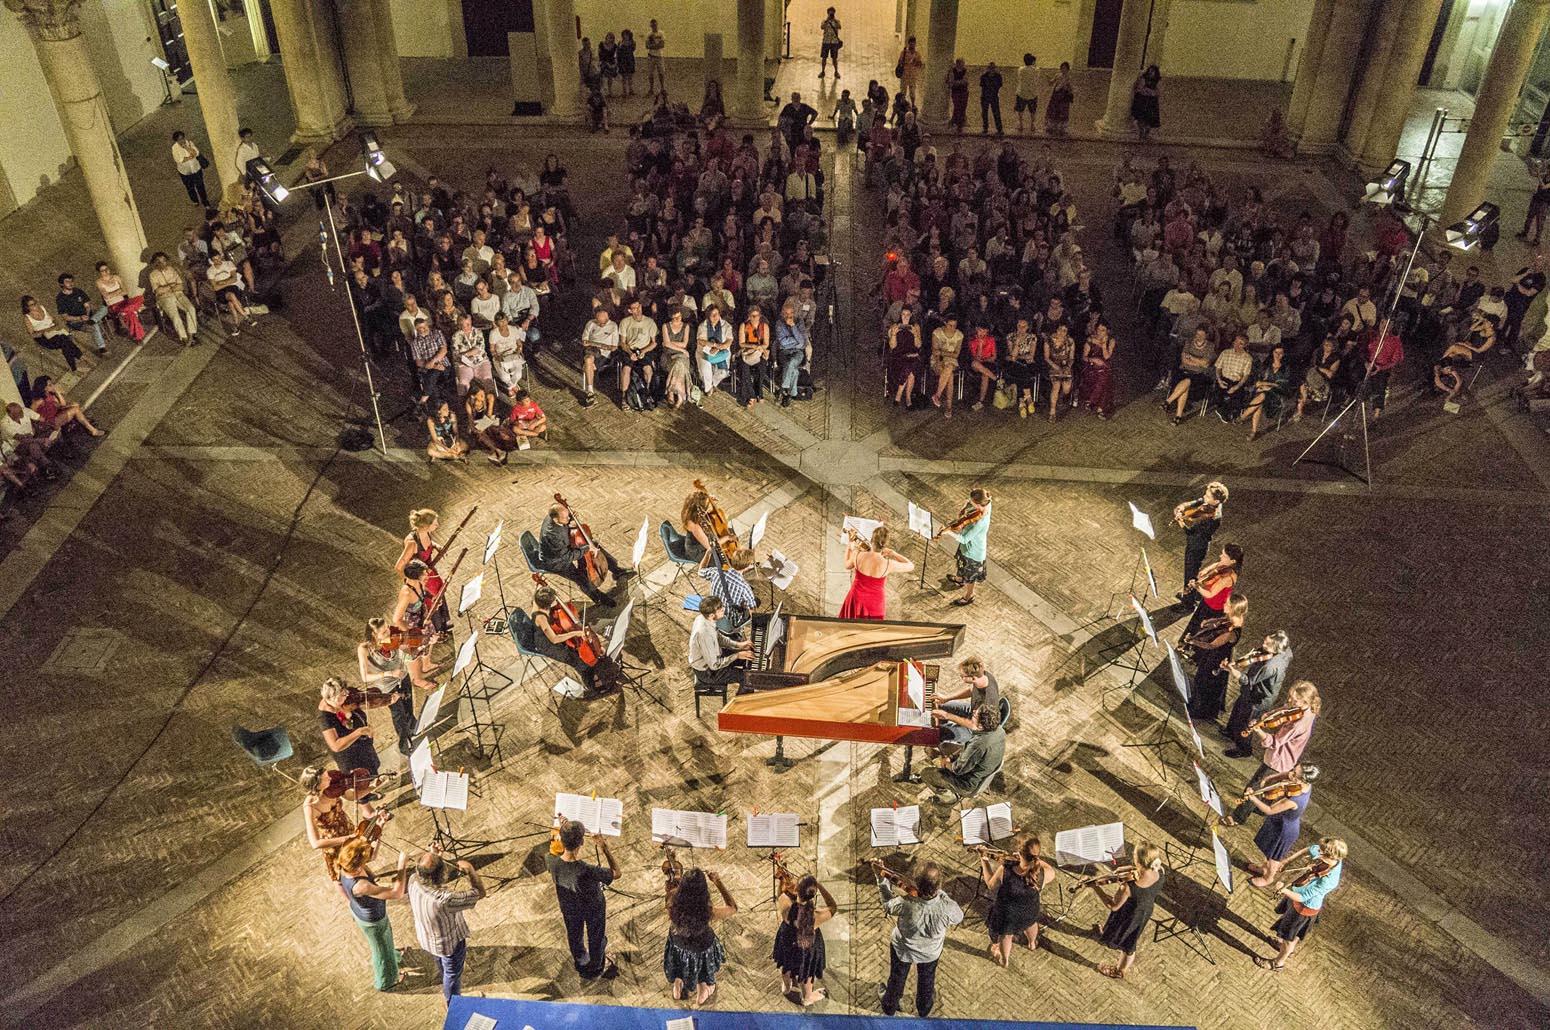 Urbino Musica Antica